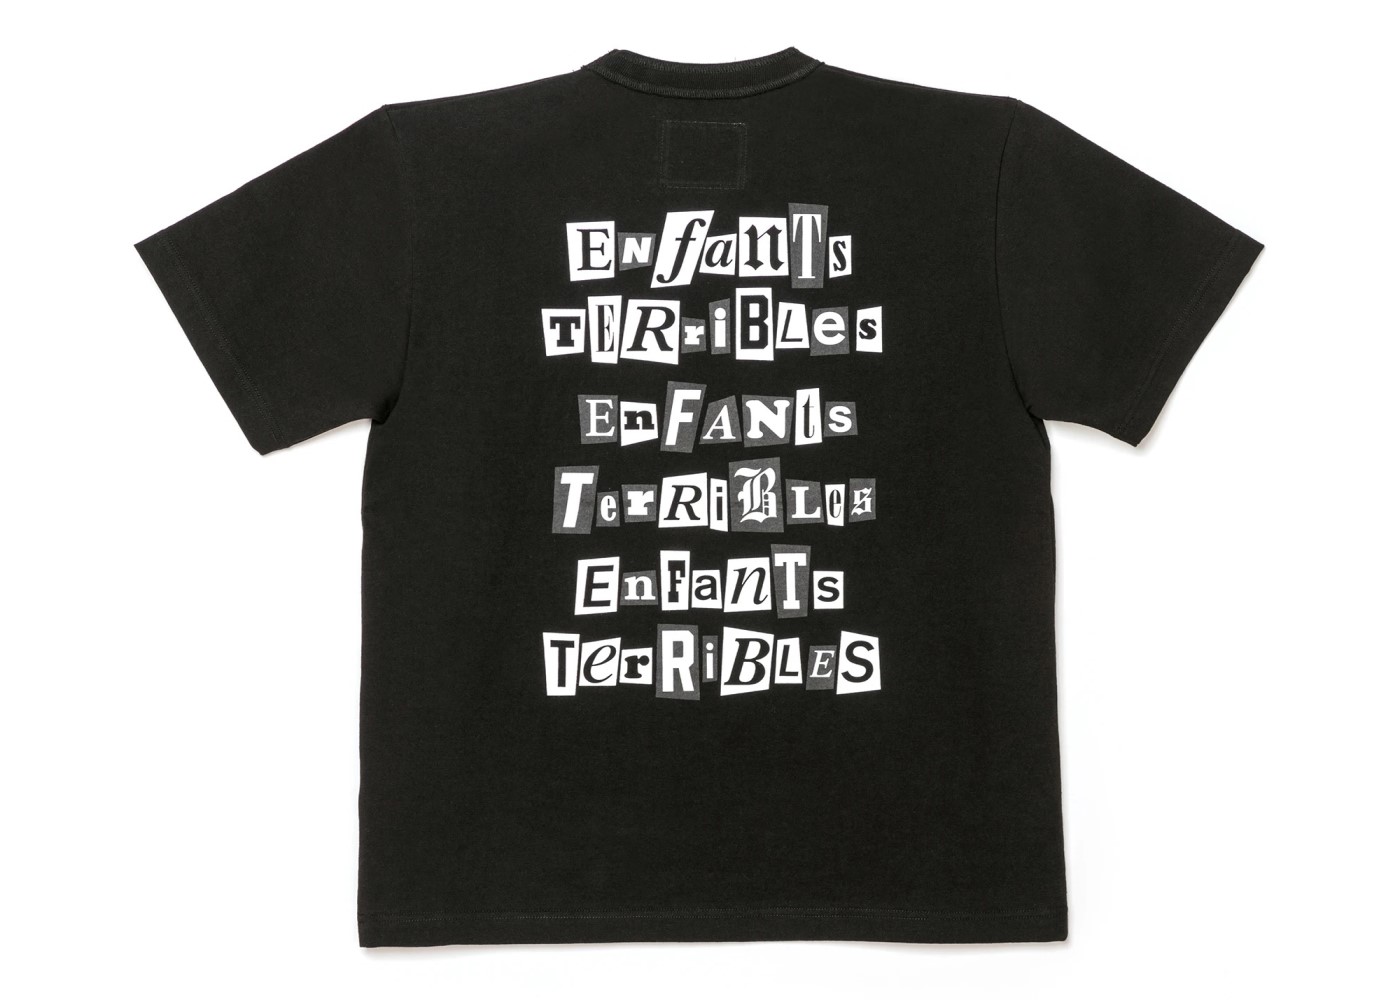 Sacai x Jean Paul Gaultier / Enfants Terribles Print T-Shirt